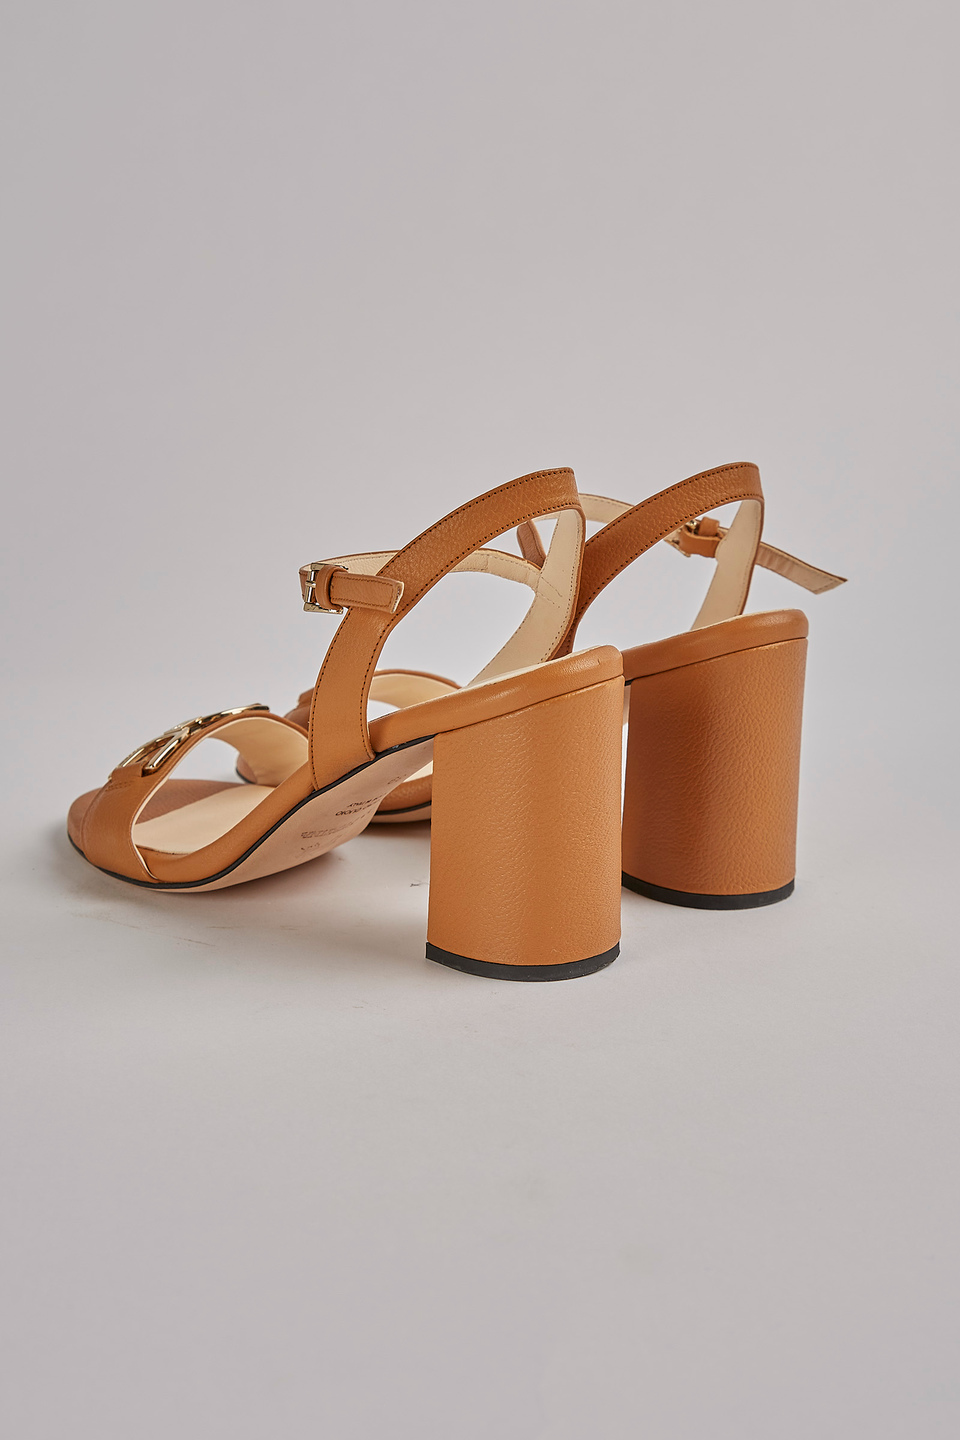 Leather sandal | La Martina - Official Online Shop